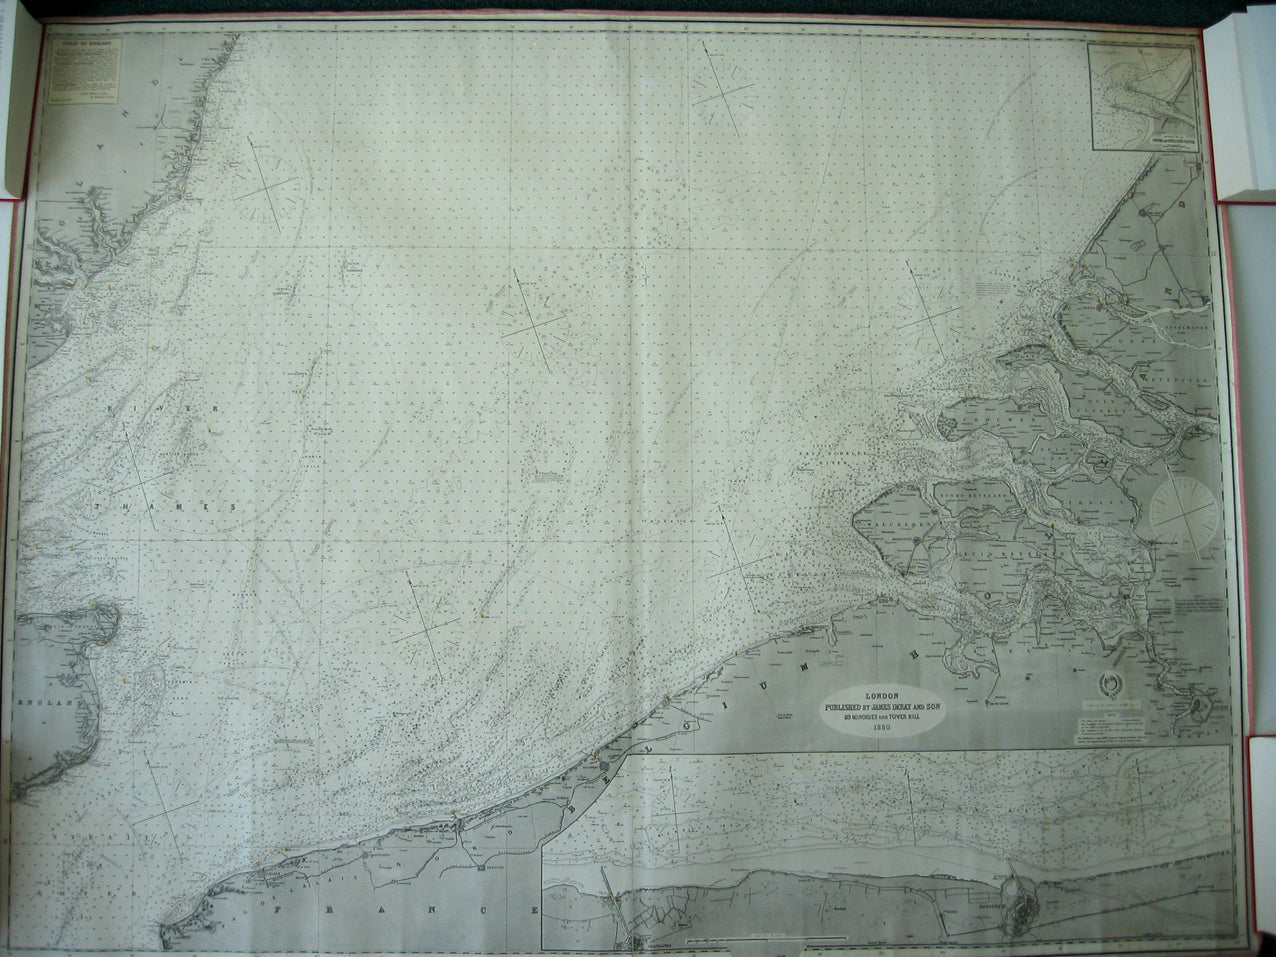 James Imray & Son: Flemish Banks River Thames to the River Schelde, 1880 [Blueback sea chart]